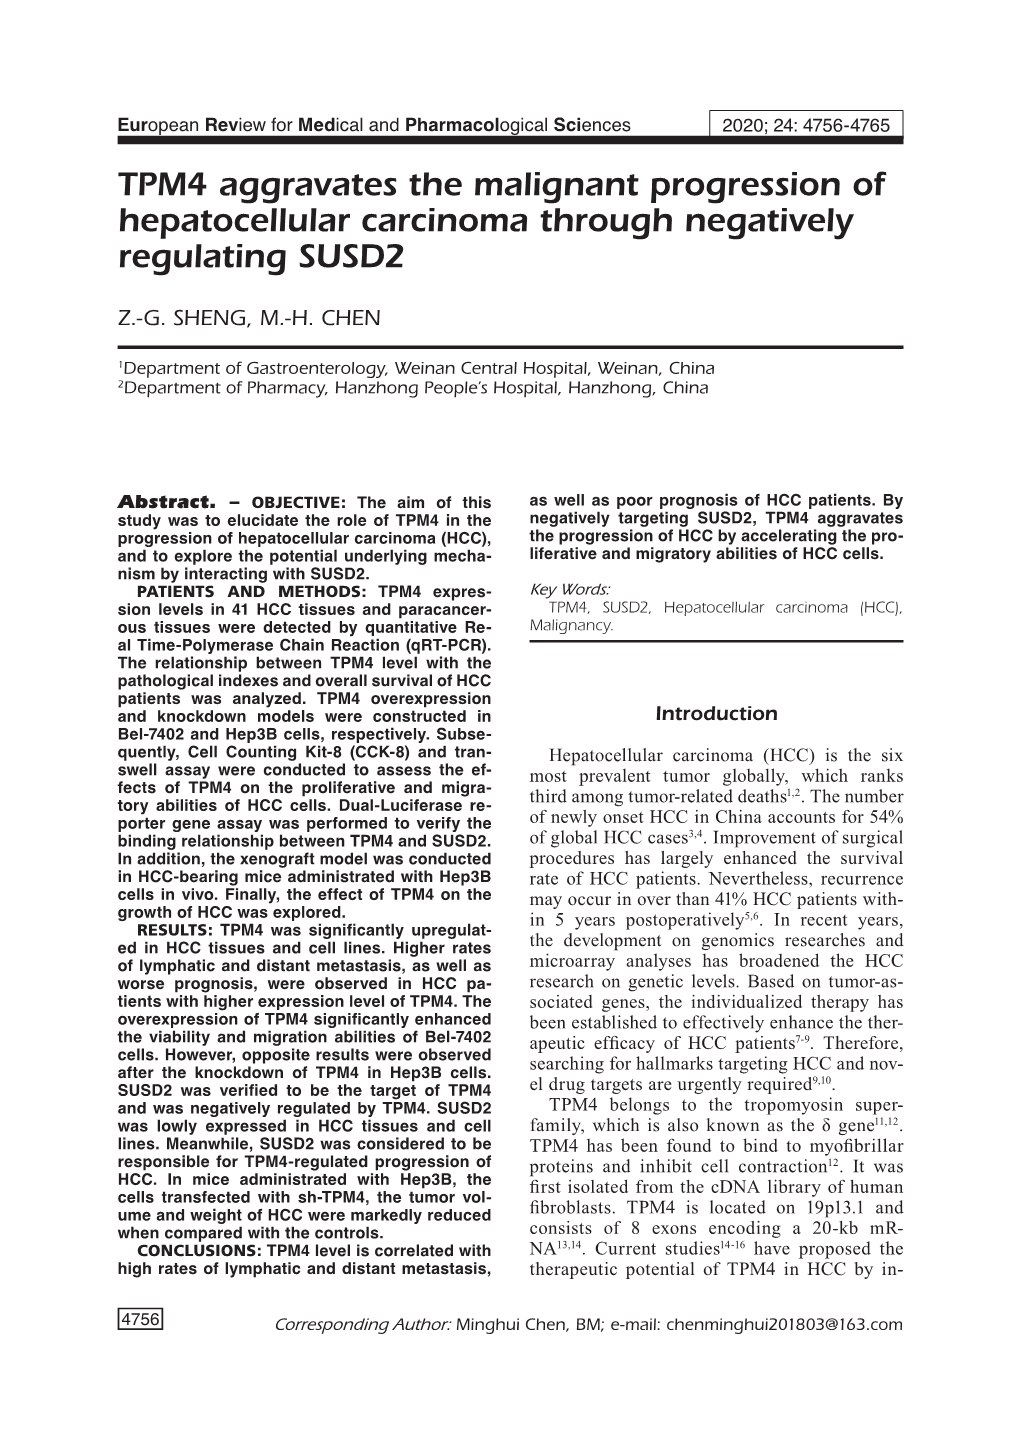 TPM4 Aggravates the Malignant Progression of Hepatocellular Carcinoma Through Negatively Regulating SUSD2